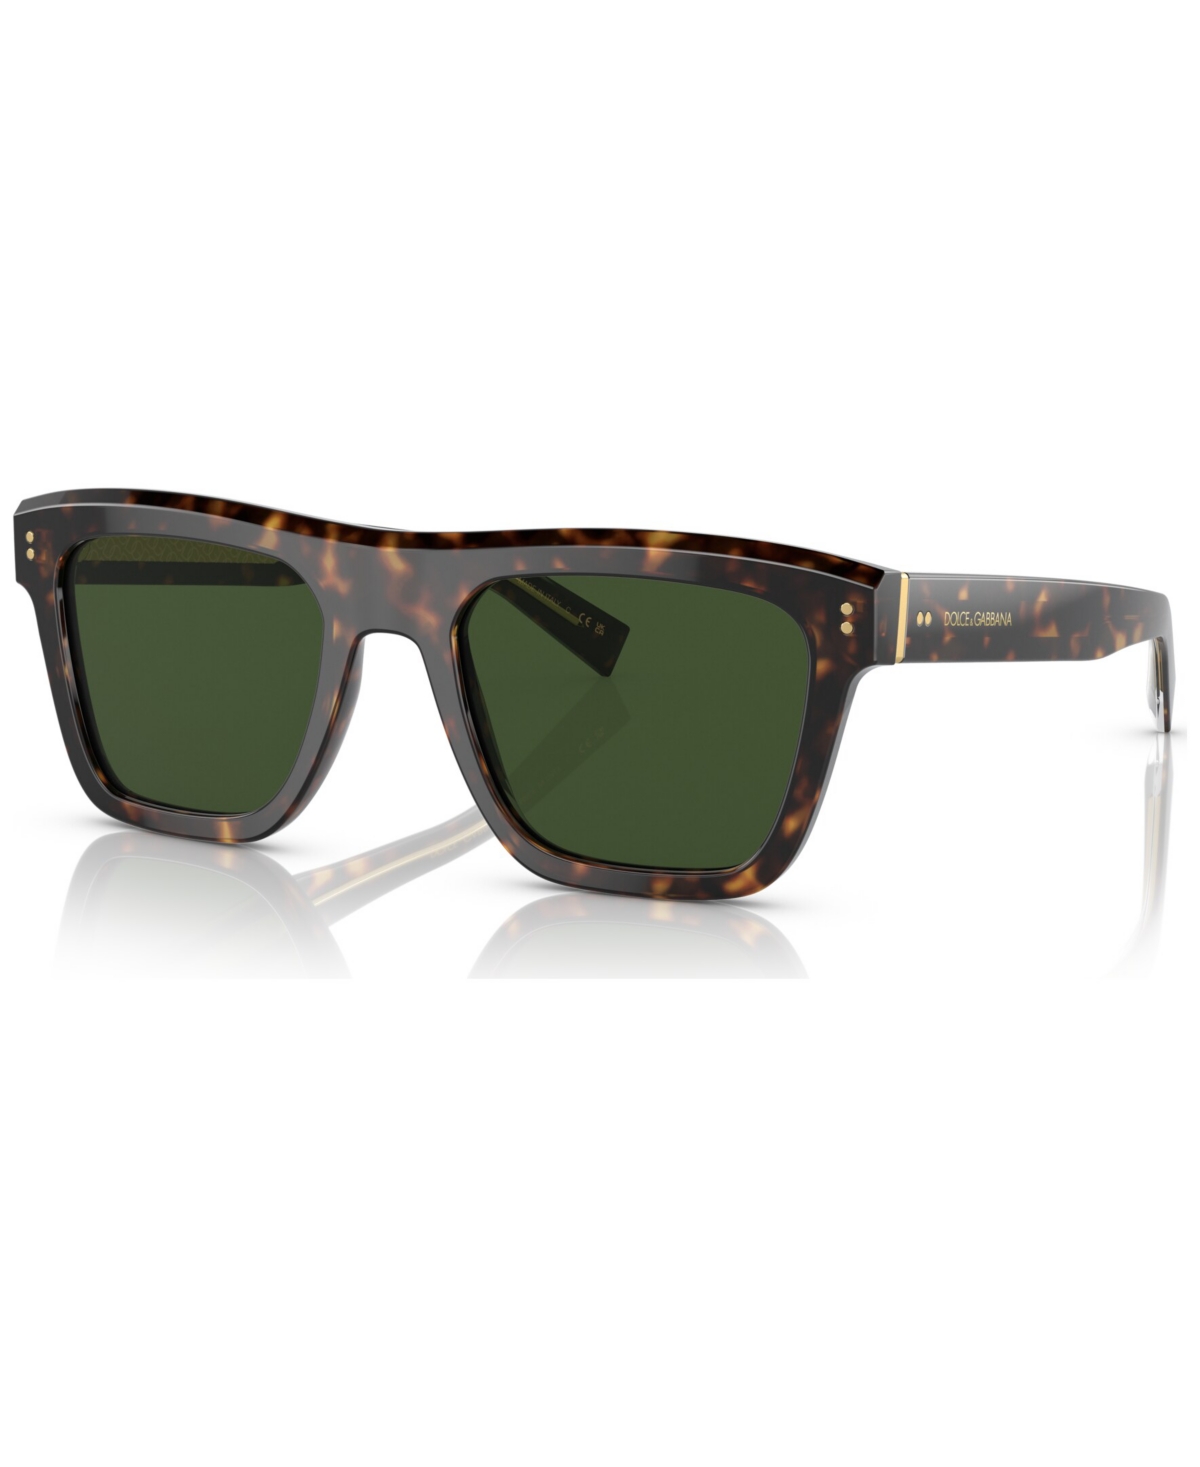 Dolce&Gabbana Men's Sunglasses, DG4420 - Havana